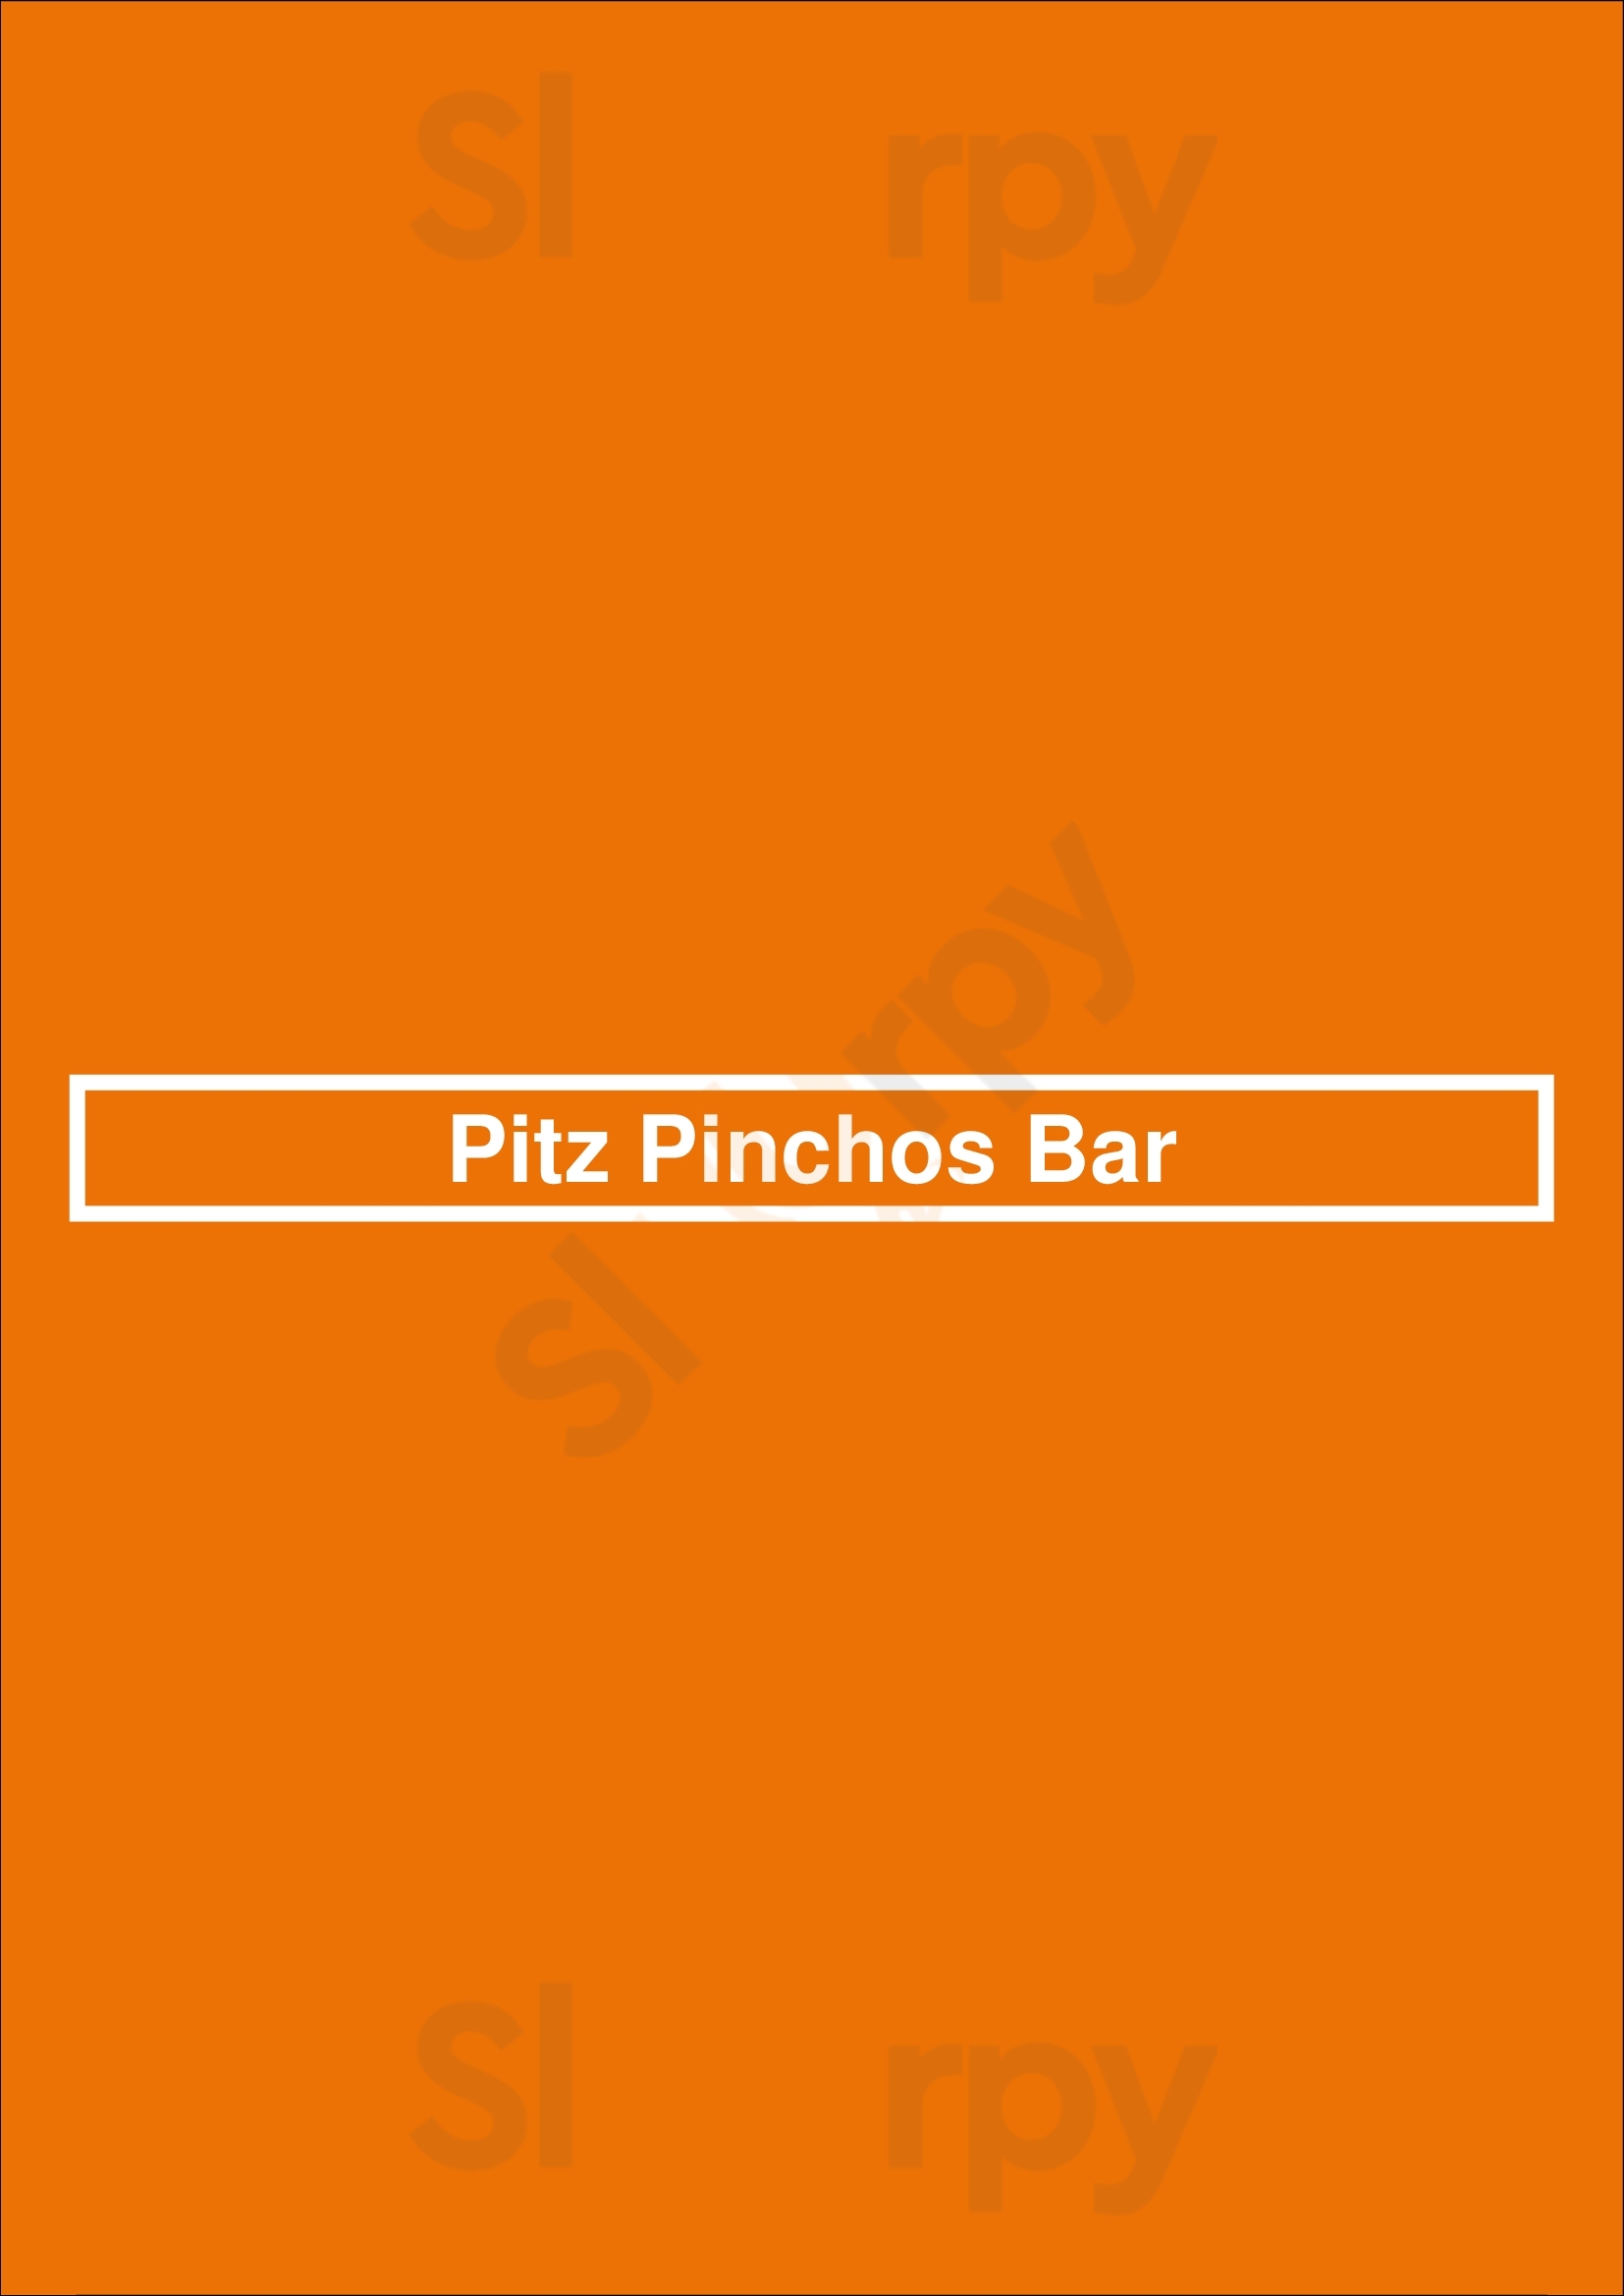 Pitz Pinchos Bar Oosterhout Menu - 1